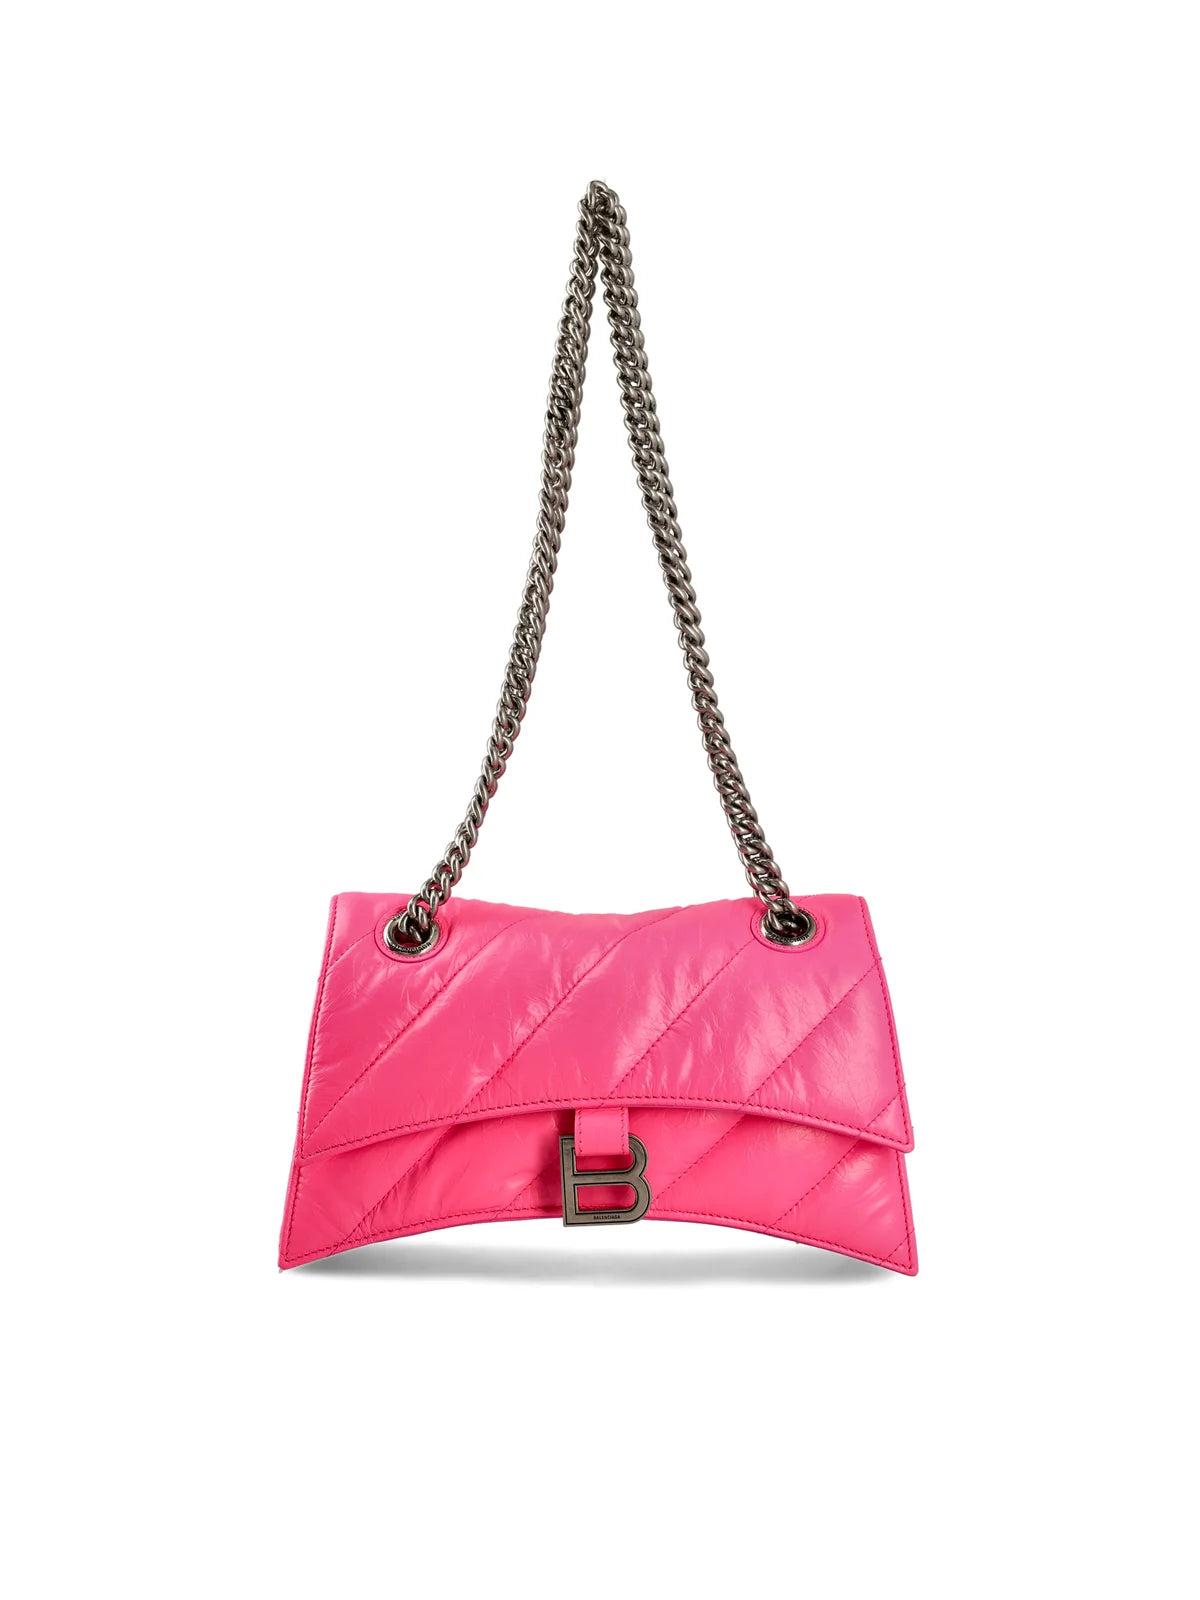 Balenciaga Crush Small Chain Bag in Pink